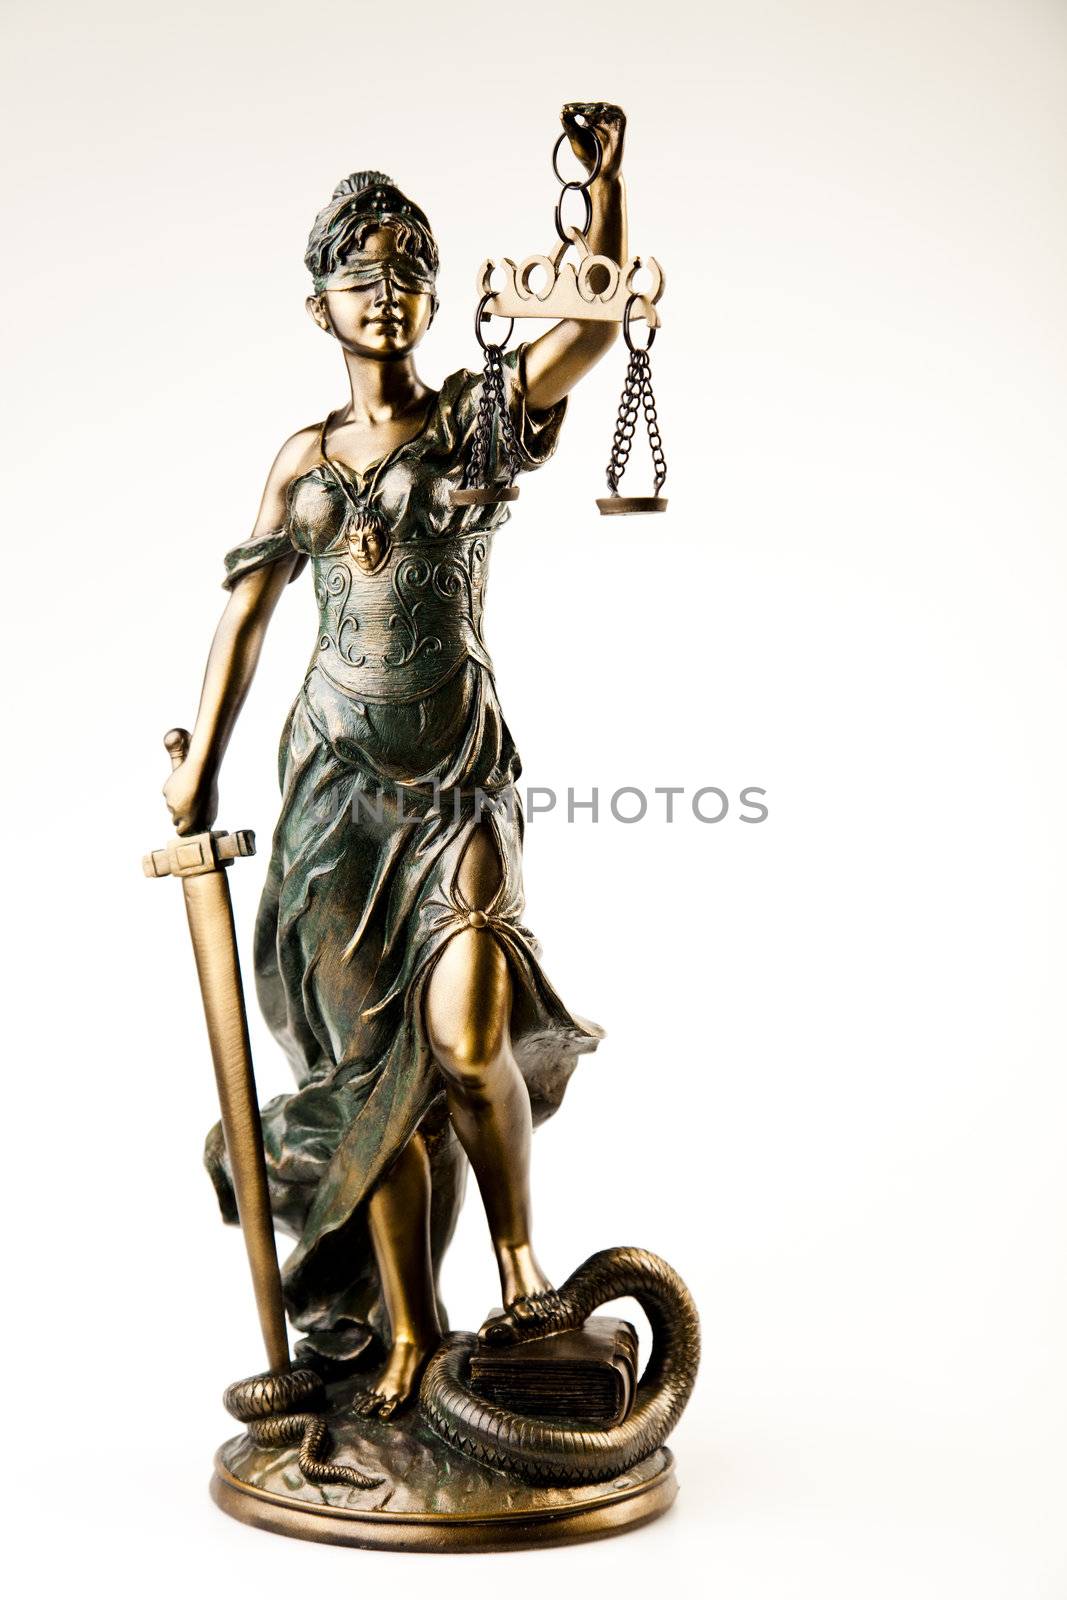 Statue of lady justice by JanPietruszka